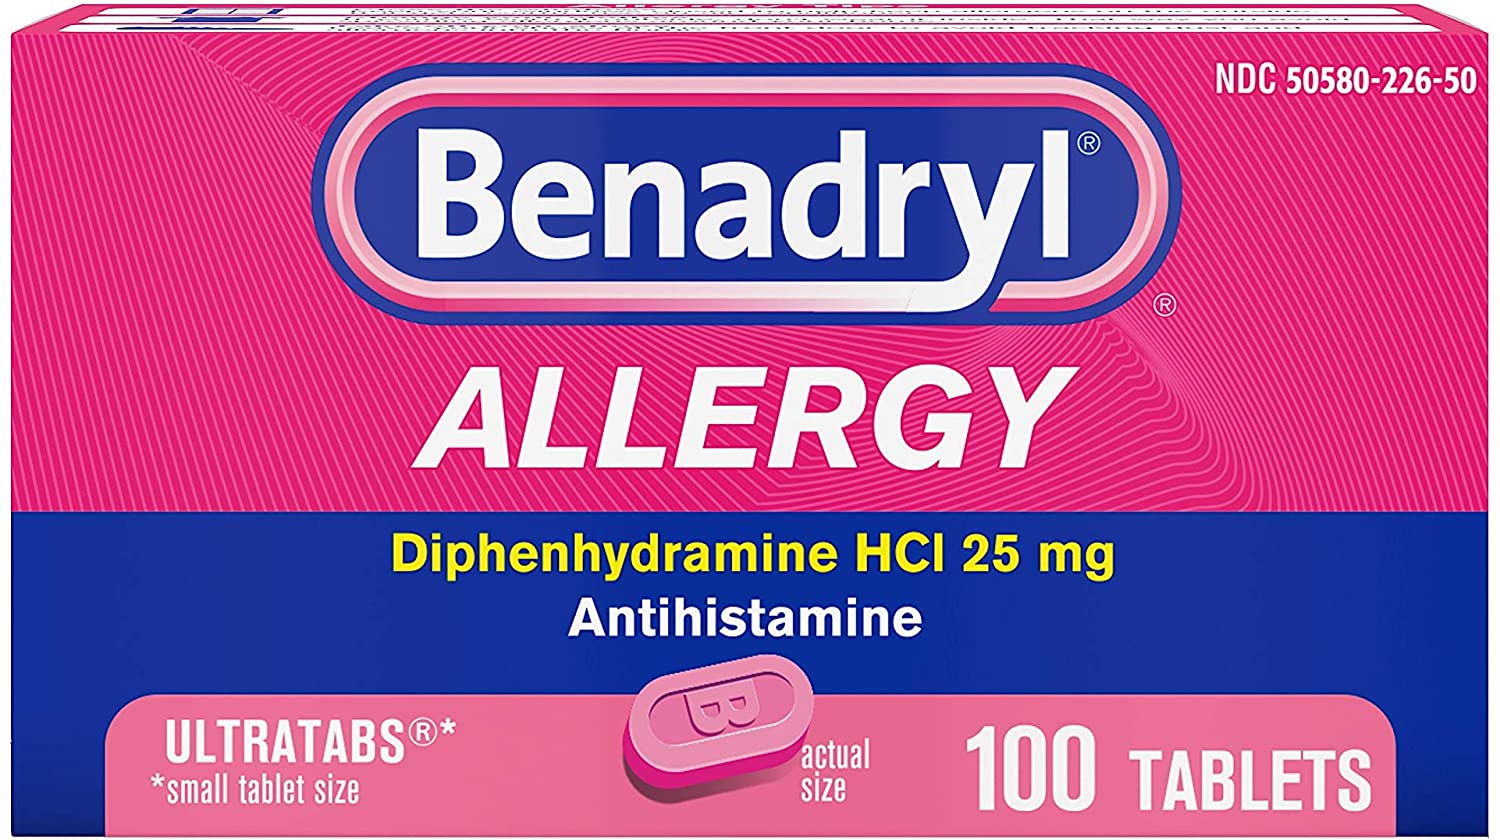 Benadryl Ultratabs compresse anti vomito